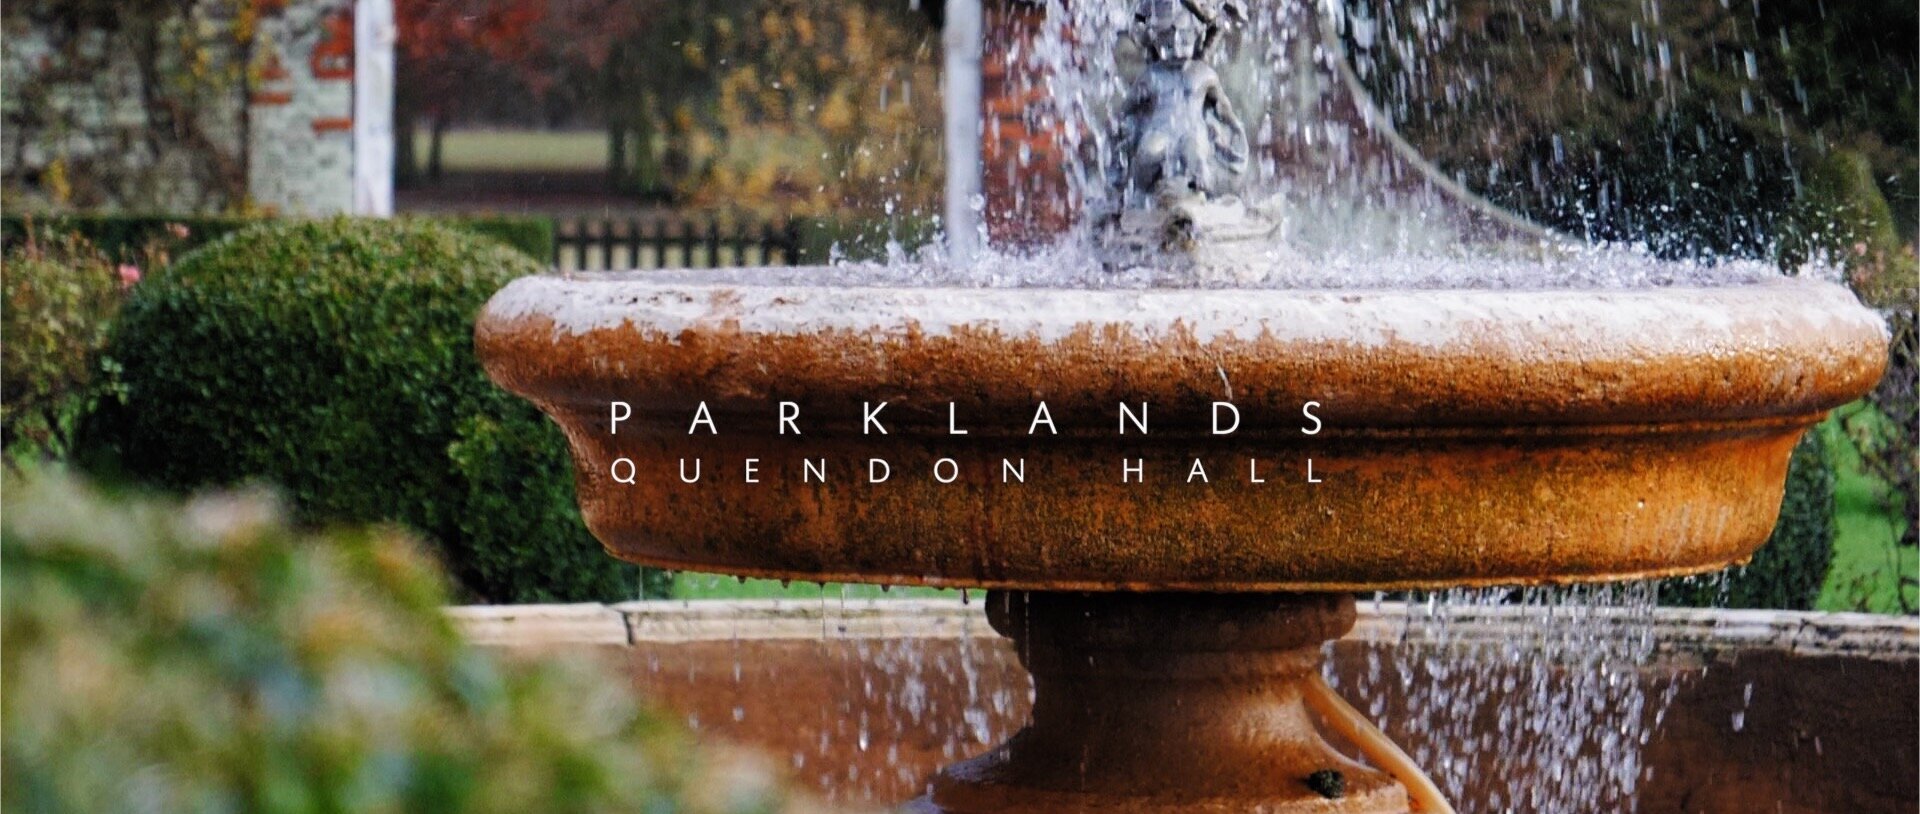 Quendon Hall Parklands wedding videos.jpg